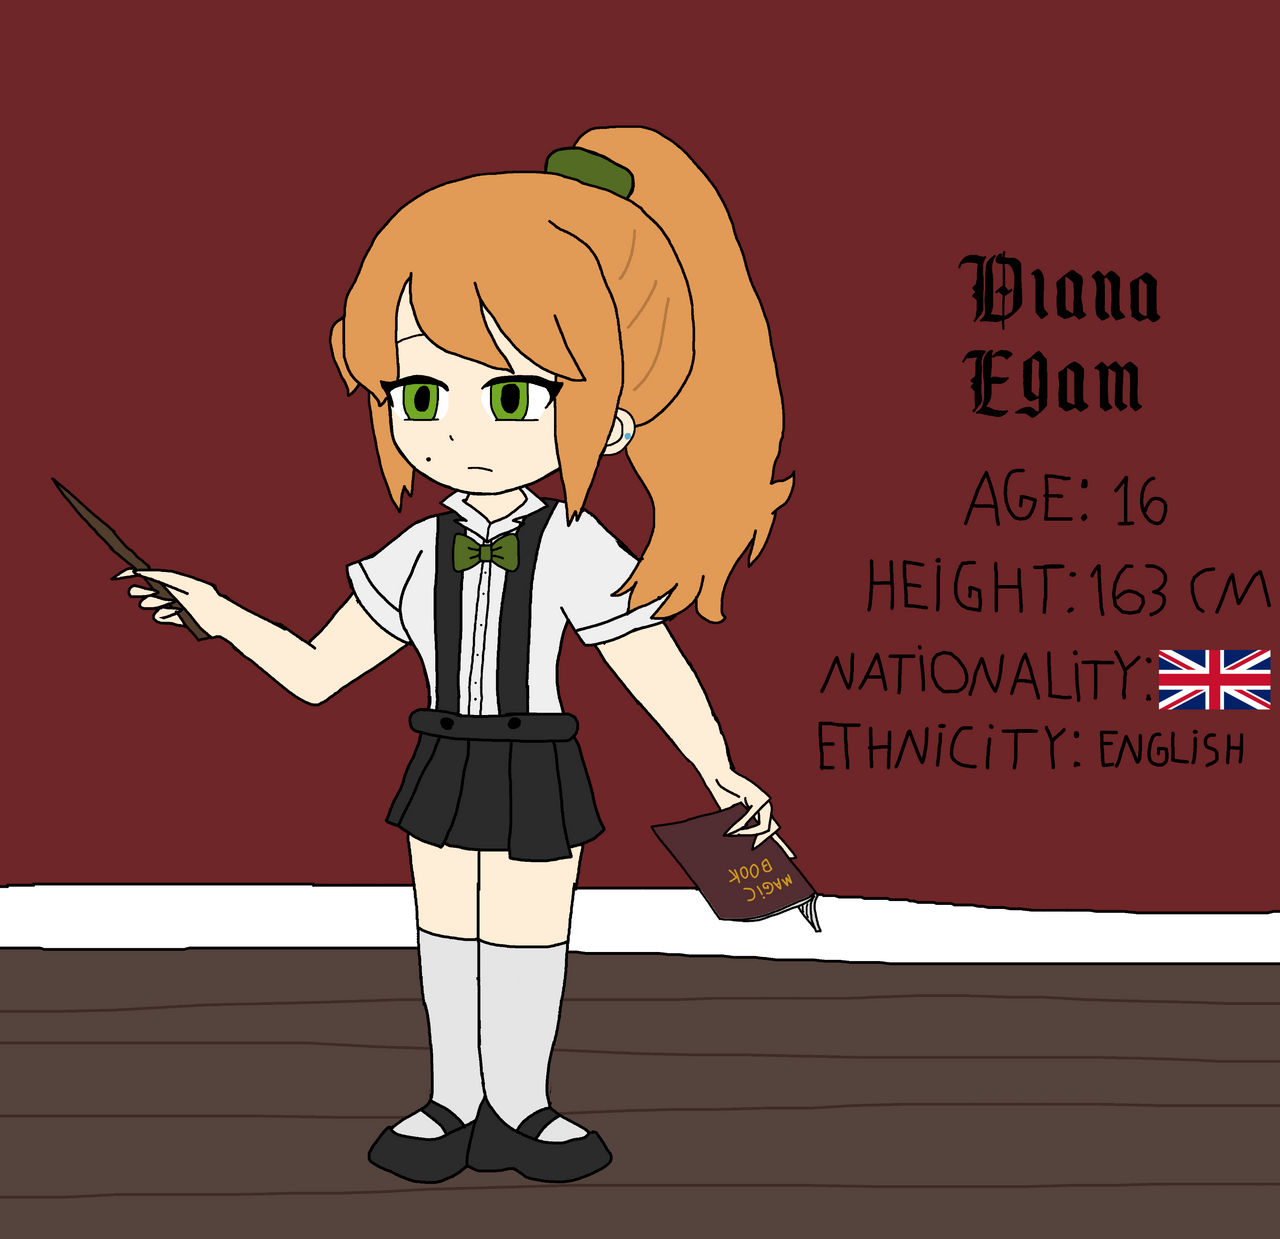 Meet Diana Egam (Biography) by Gontsuk on DeviantArt